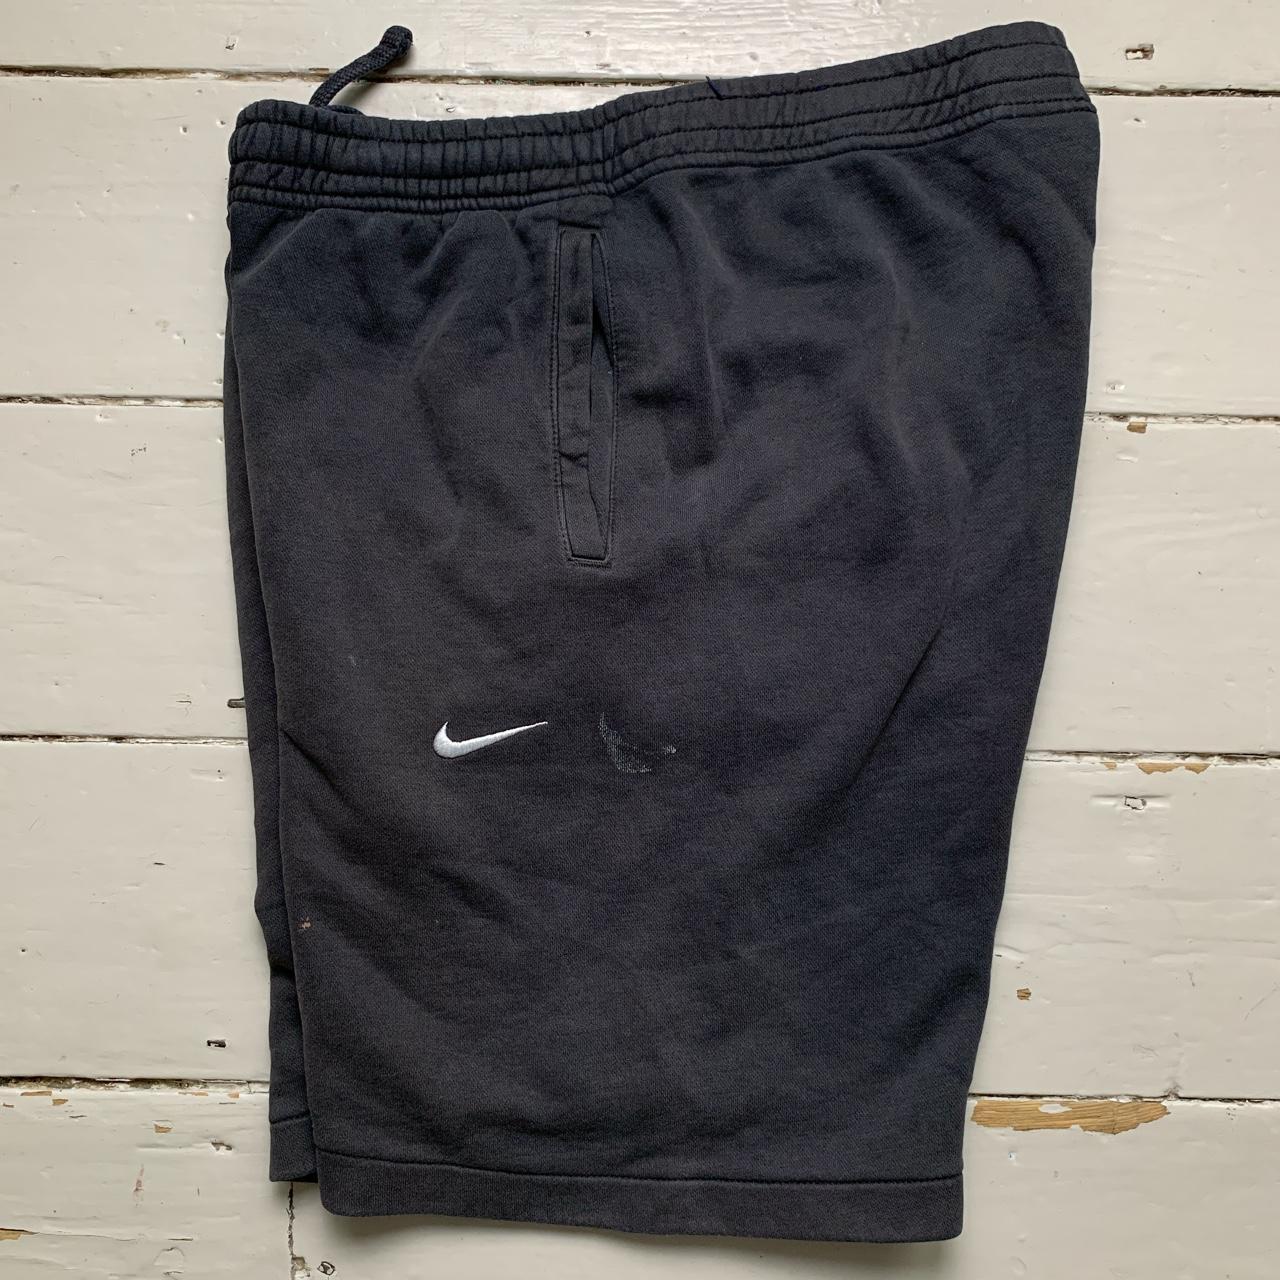 Nike Black and White Swoosh Cotton Shorts